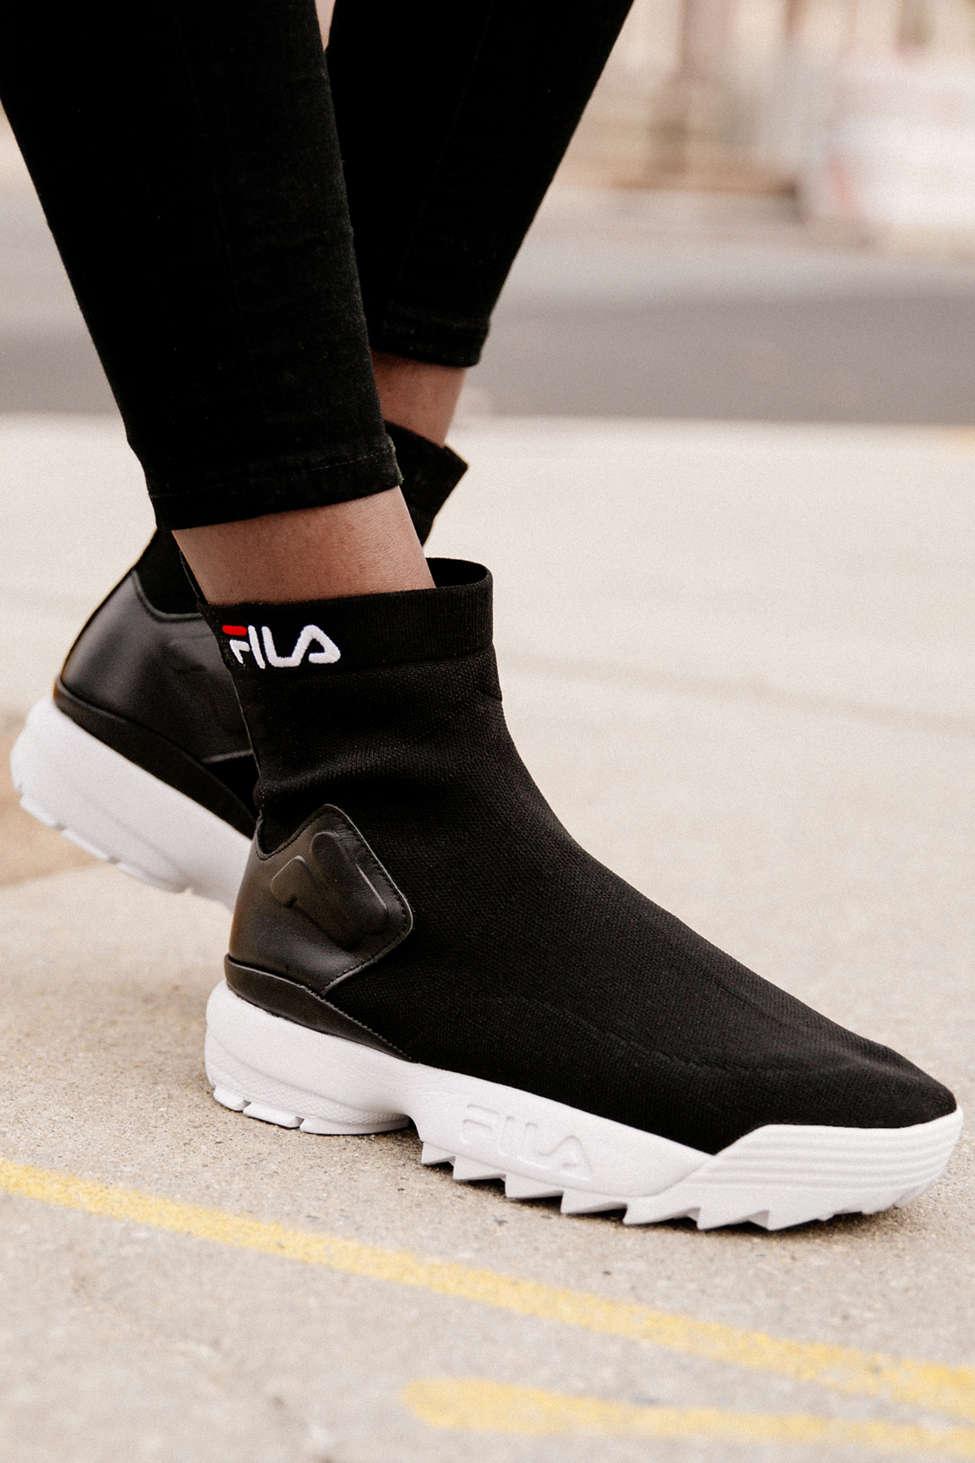 Fila Leather Fila Uo Exclusive Disruptor Sock Boot in Black - Lyst